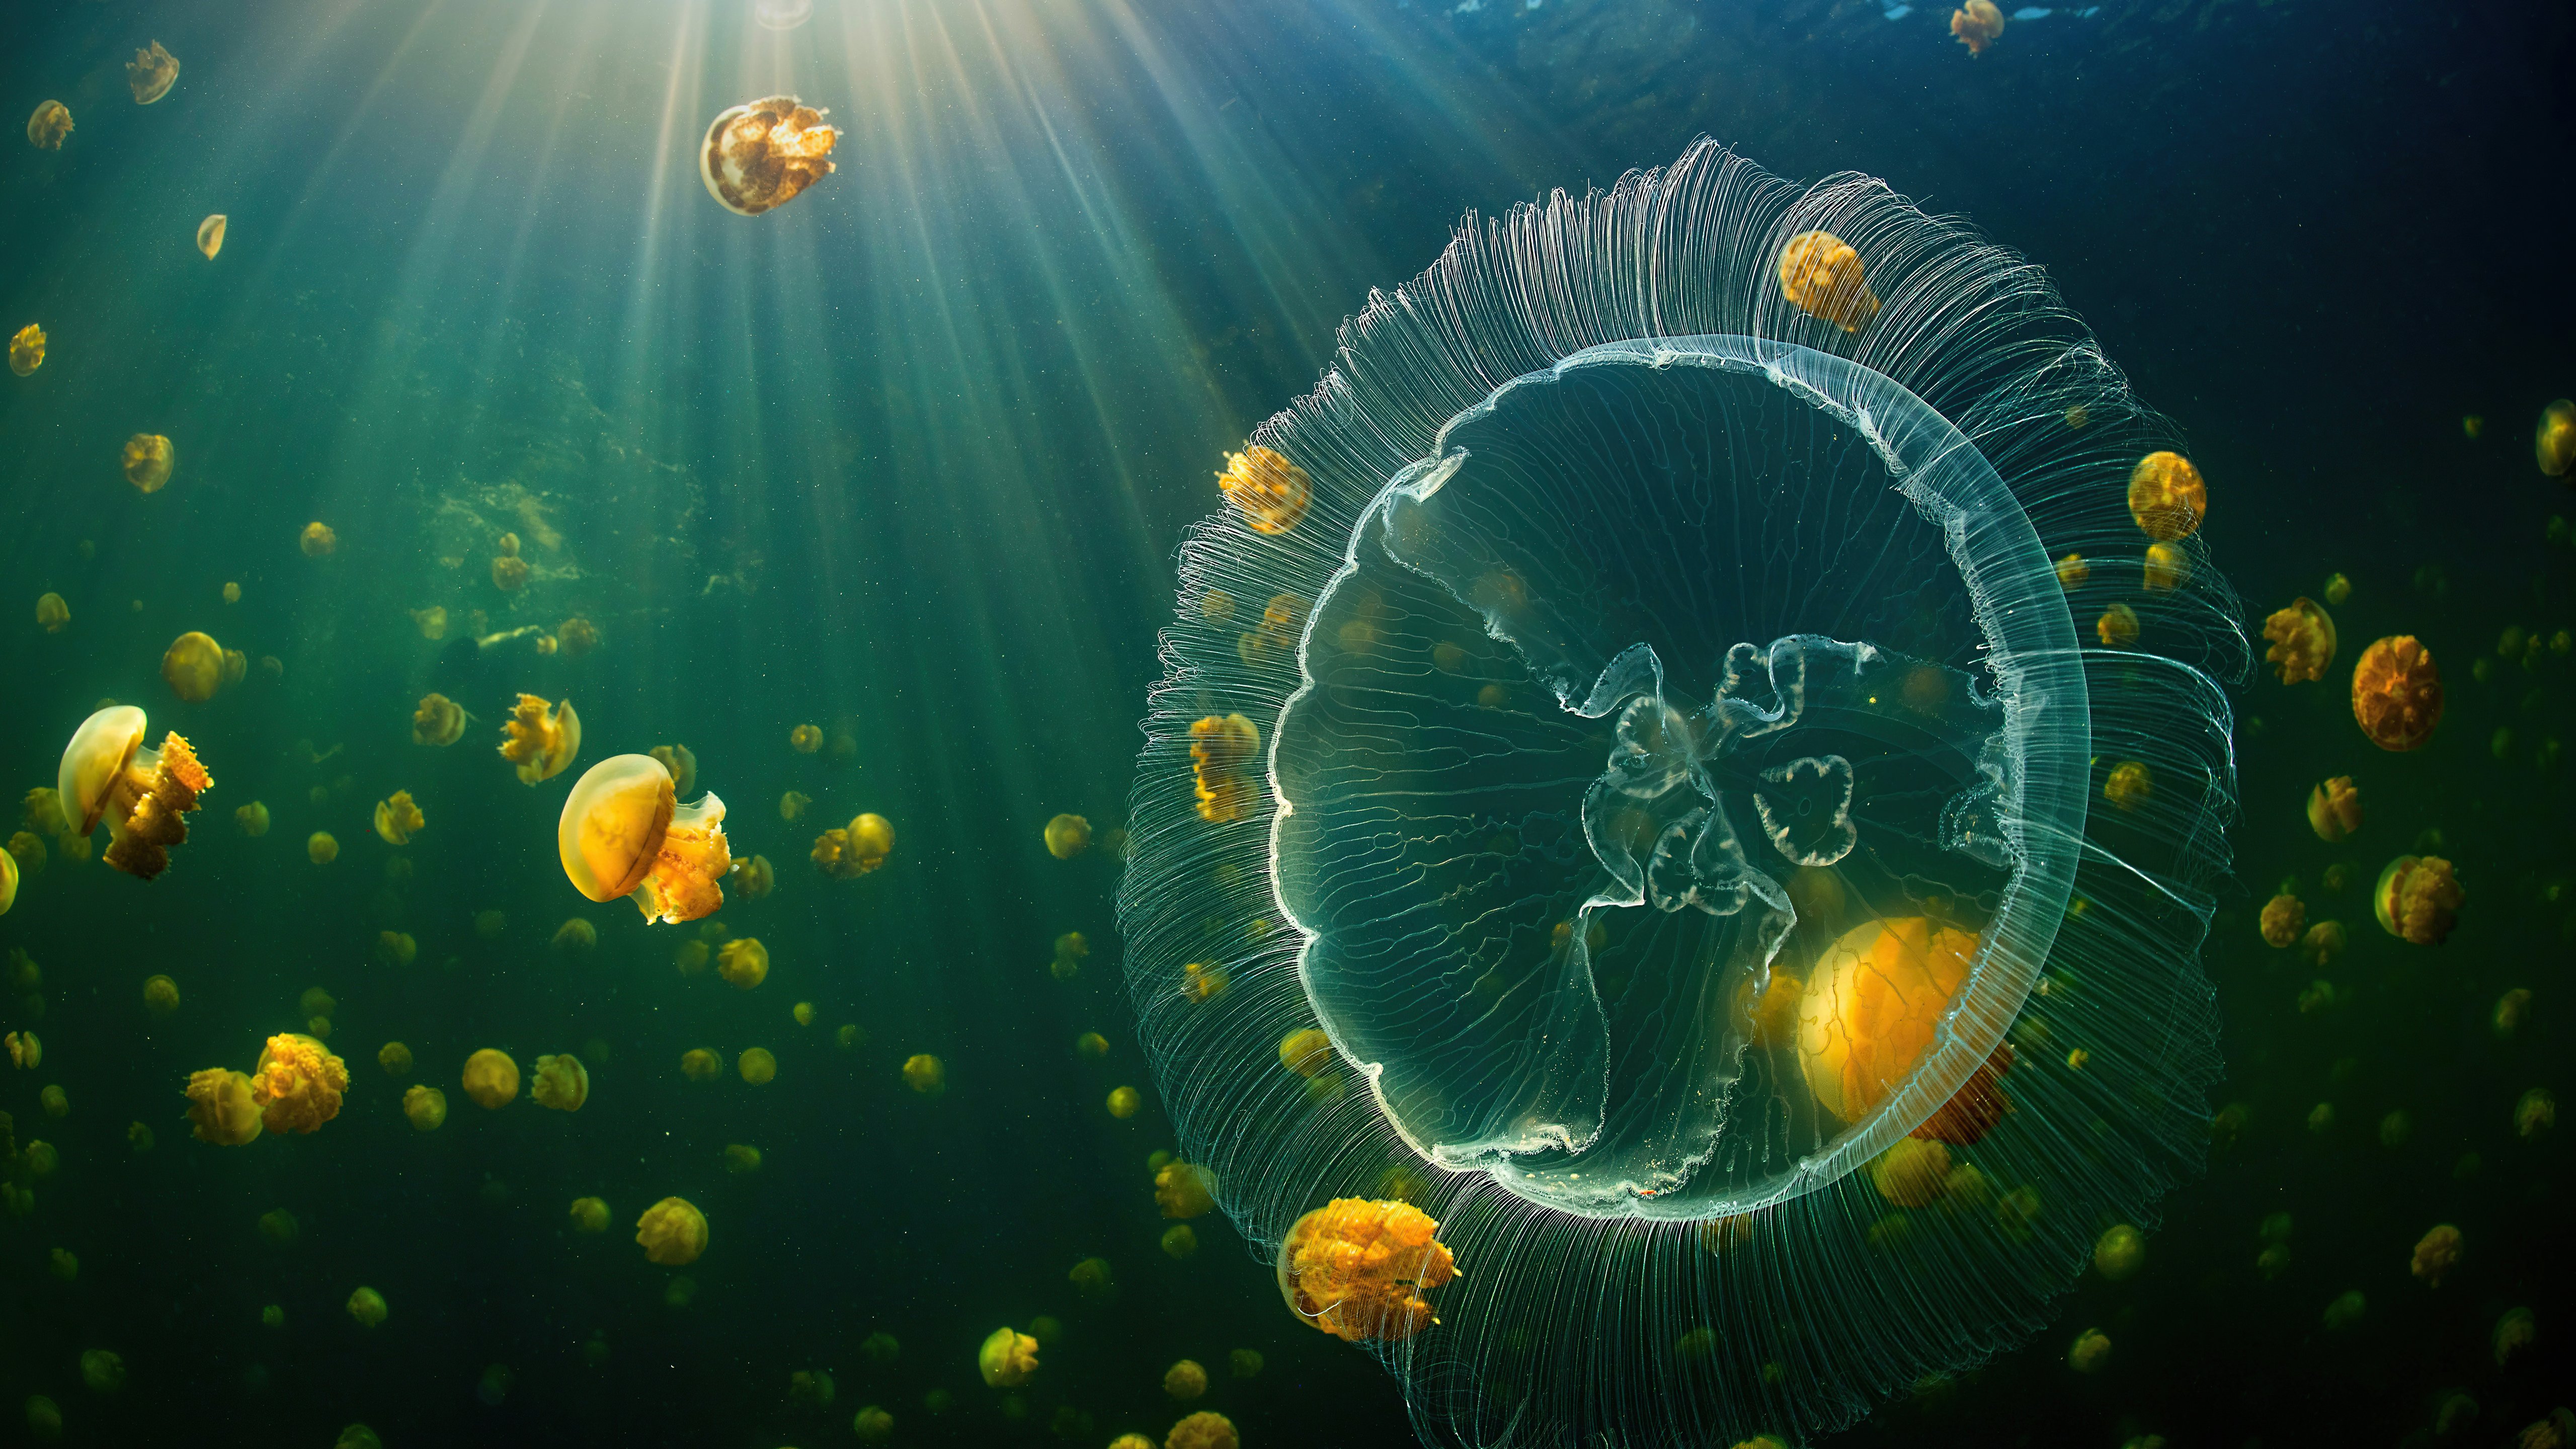 Wallpaper Jellyfish under the sea